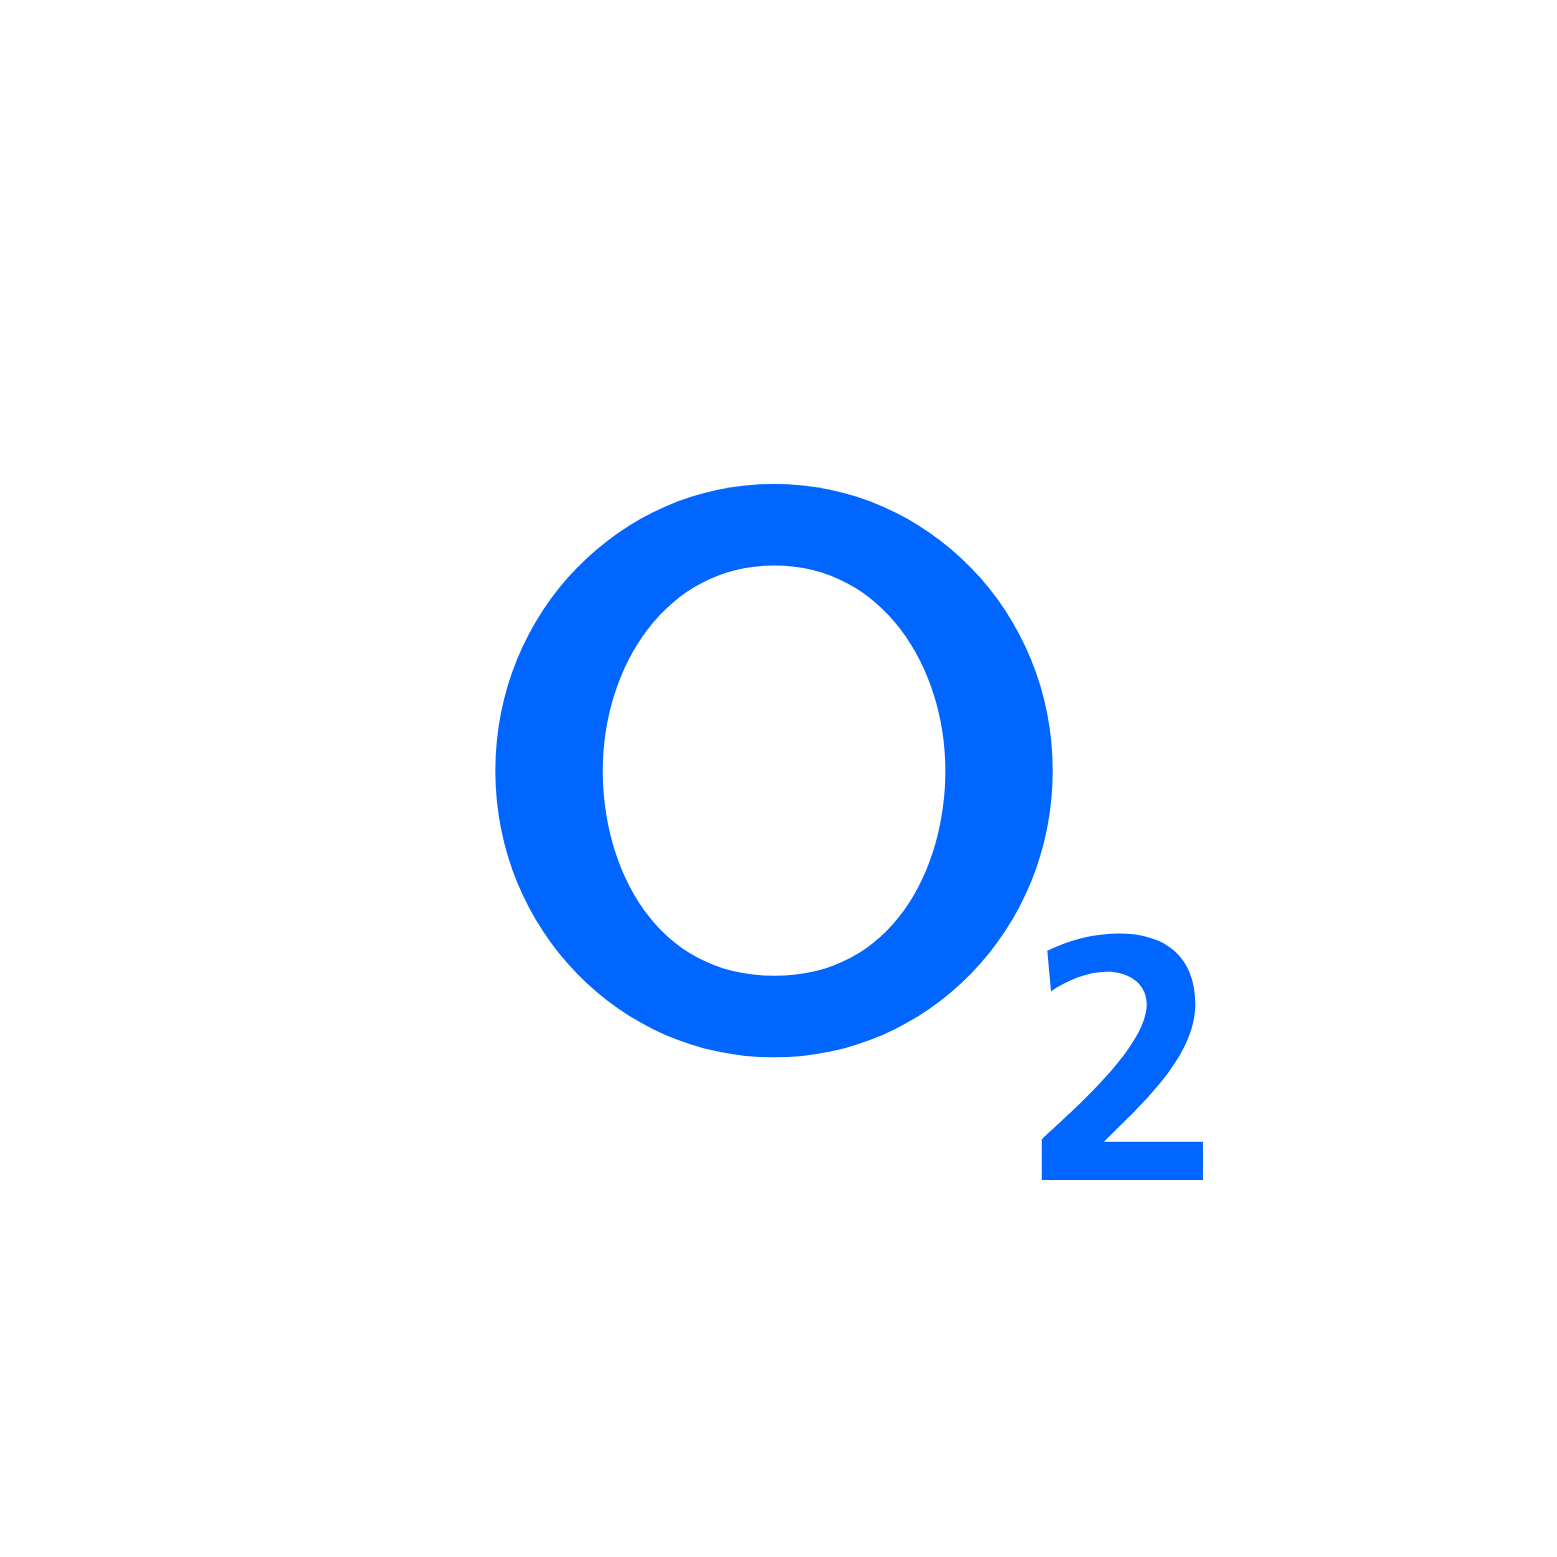 Telefónica Deutschland (O2) logo pour fonds sombres (PNG transparent)